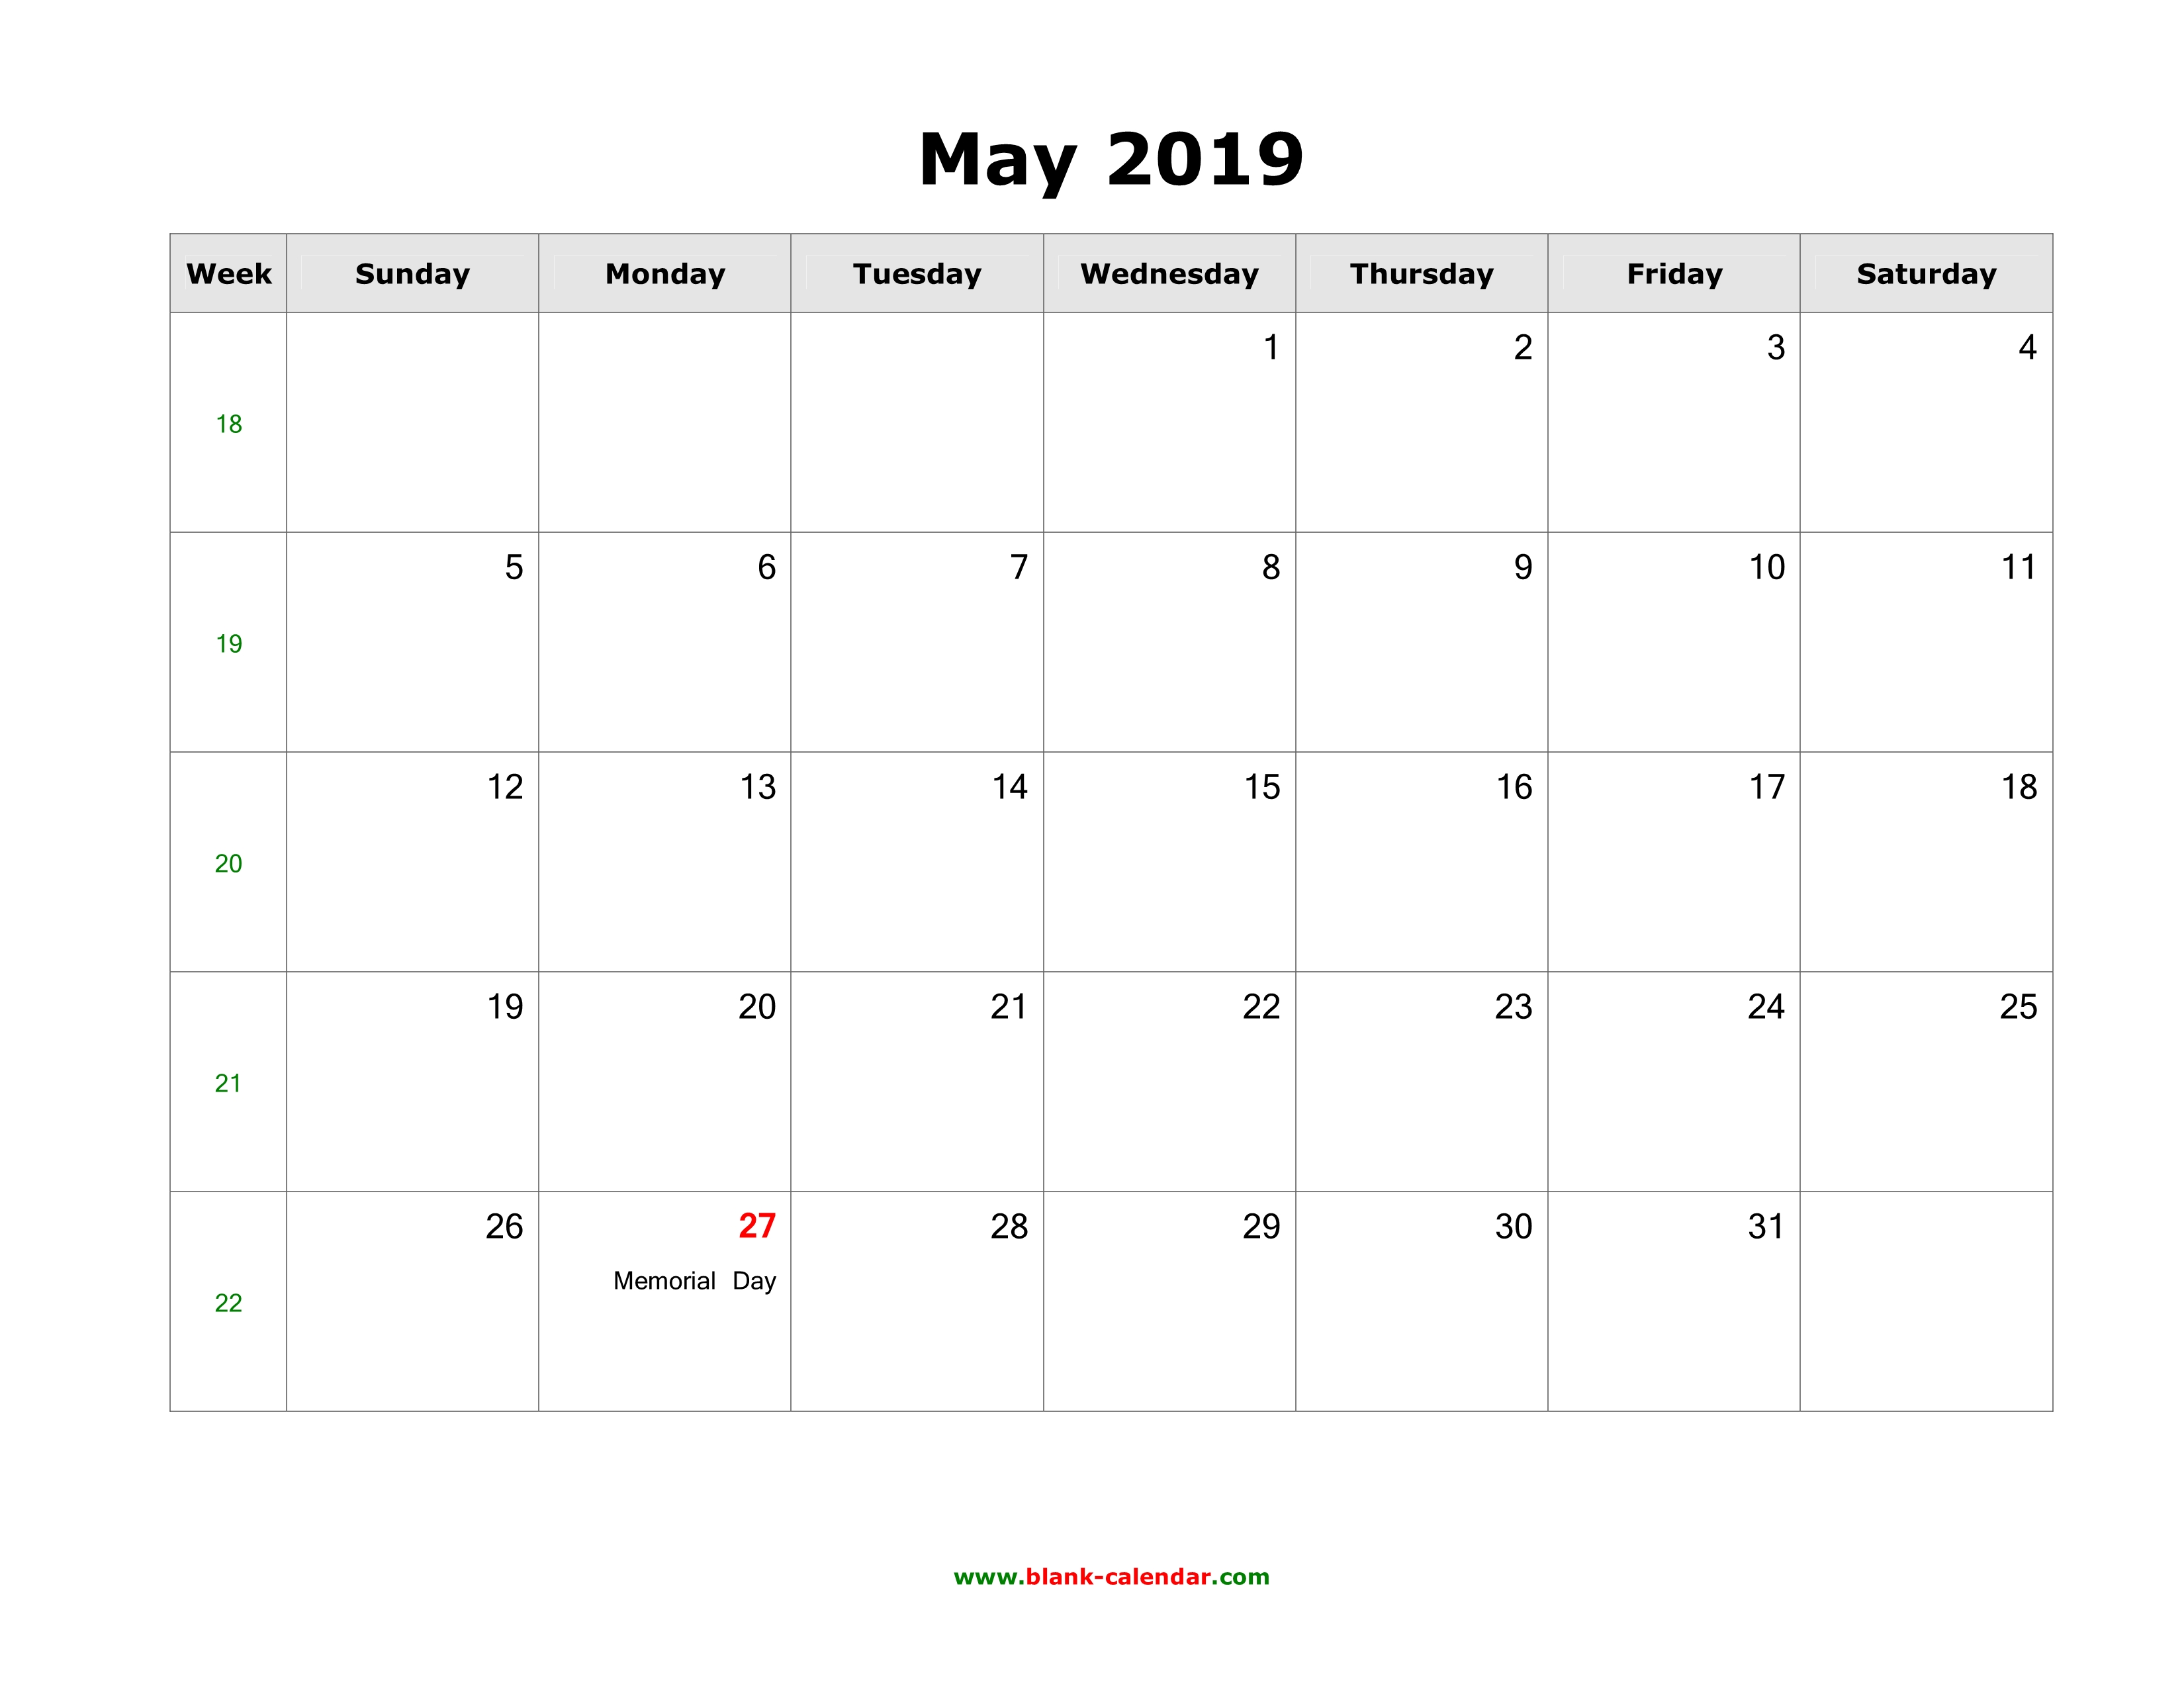 download-may-2019-blank-calendar-with-us-holidays-horizontal